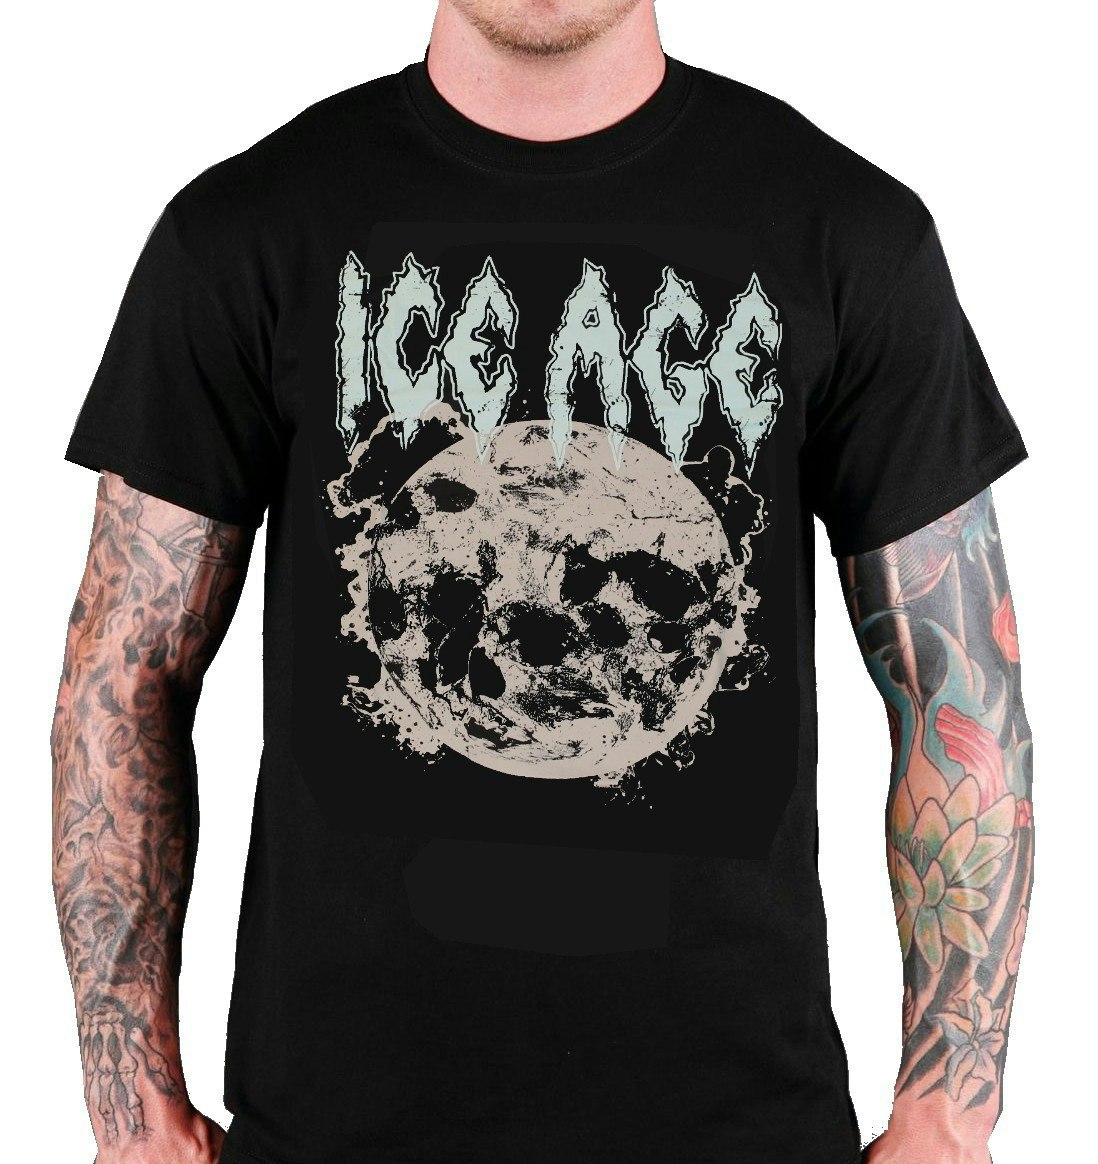 Ice age T-Shirt